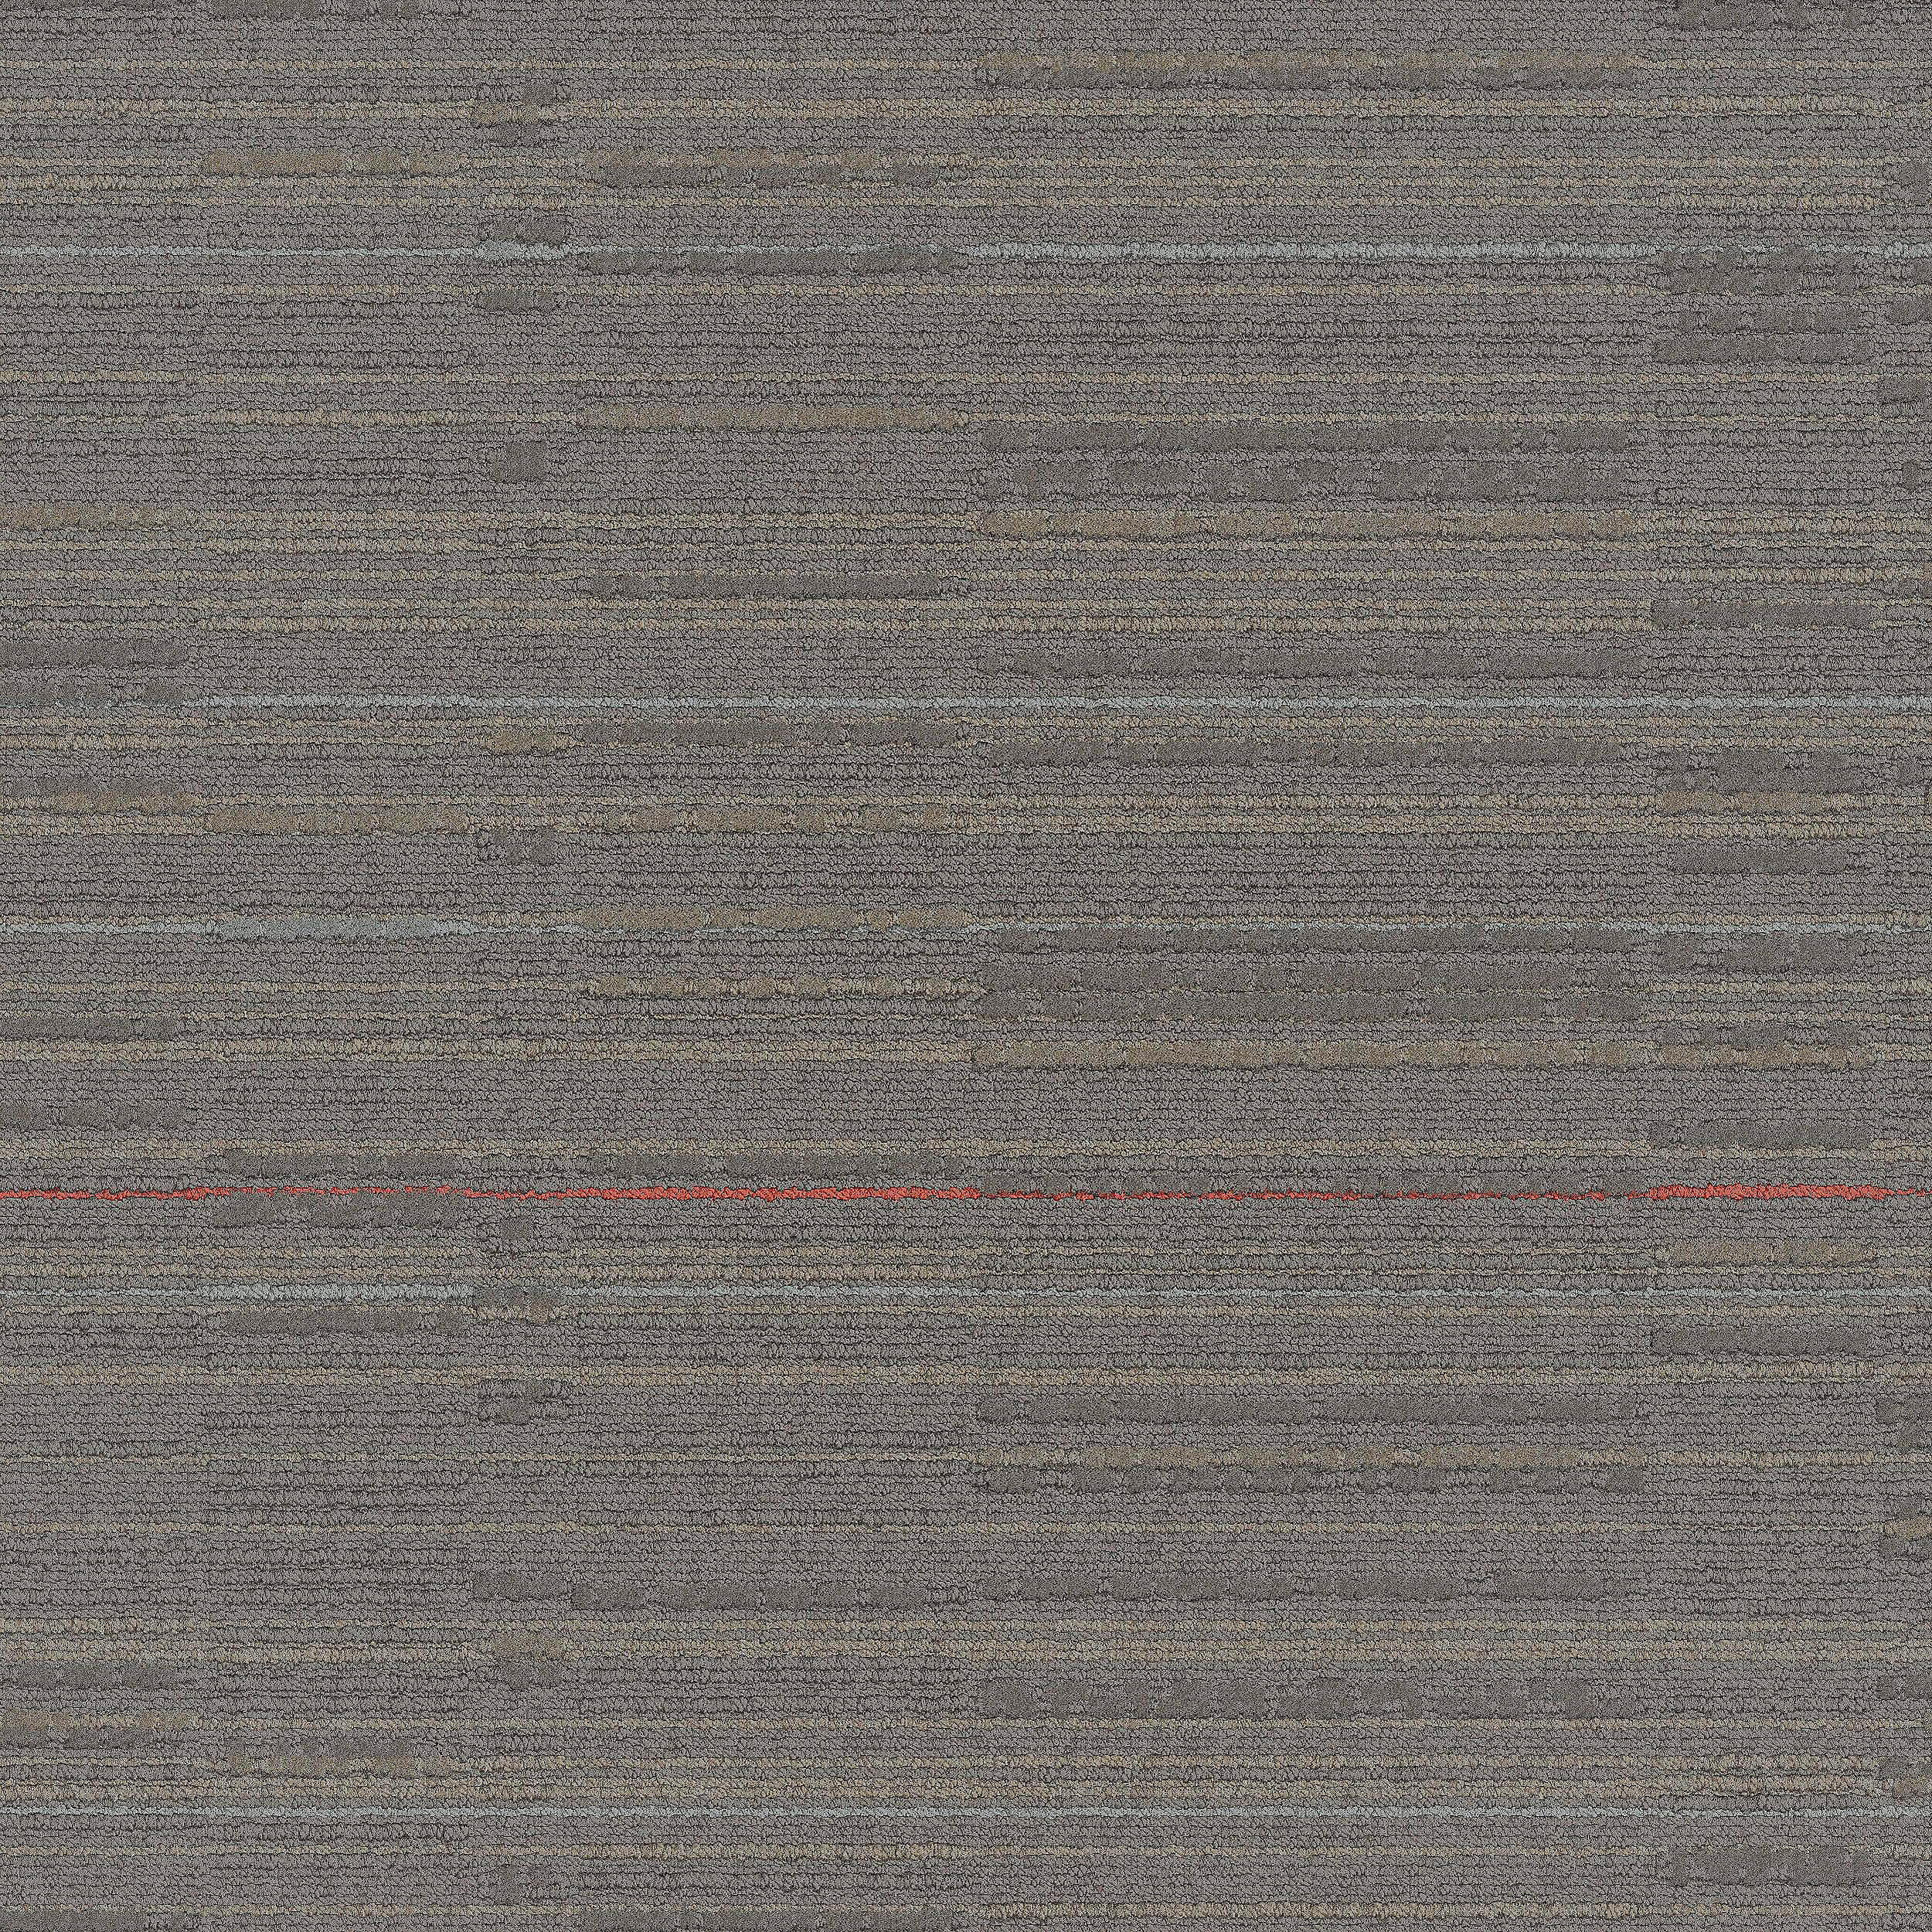 Alliteration Carpet Tile In Mineral/Persimmon numéro d’image 7